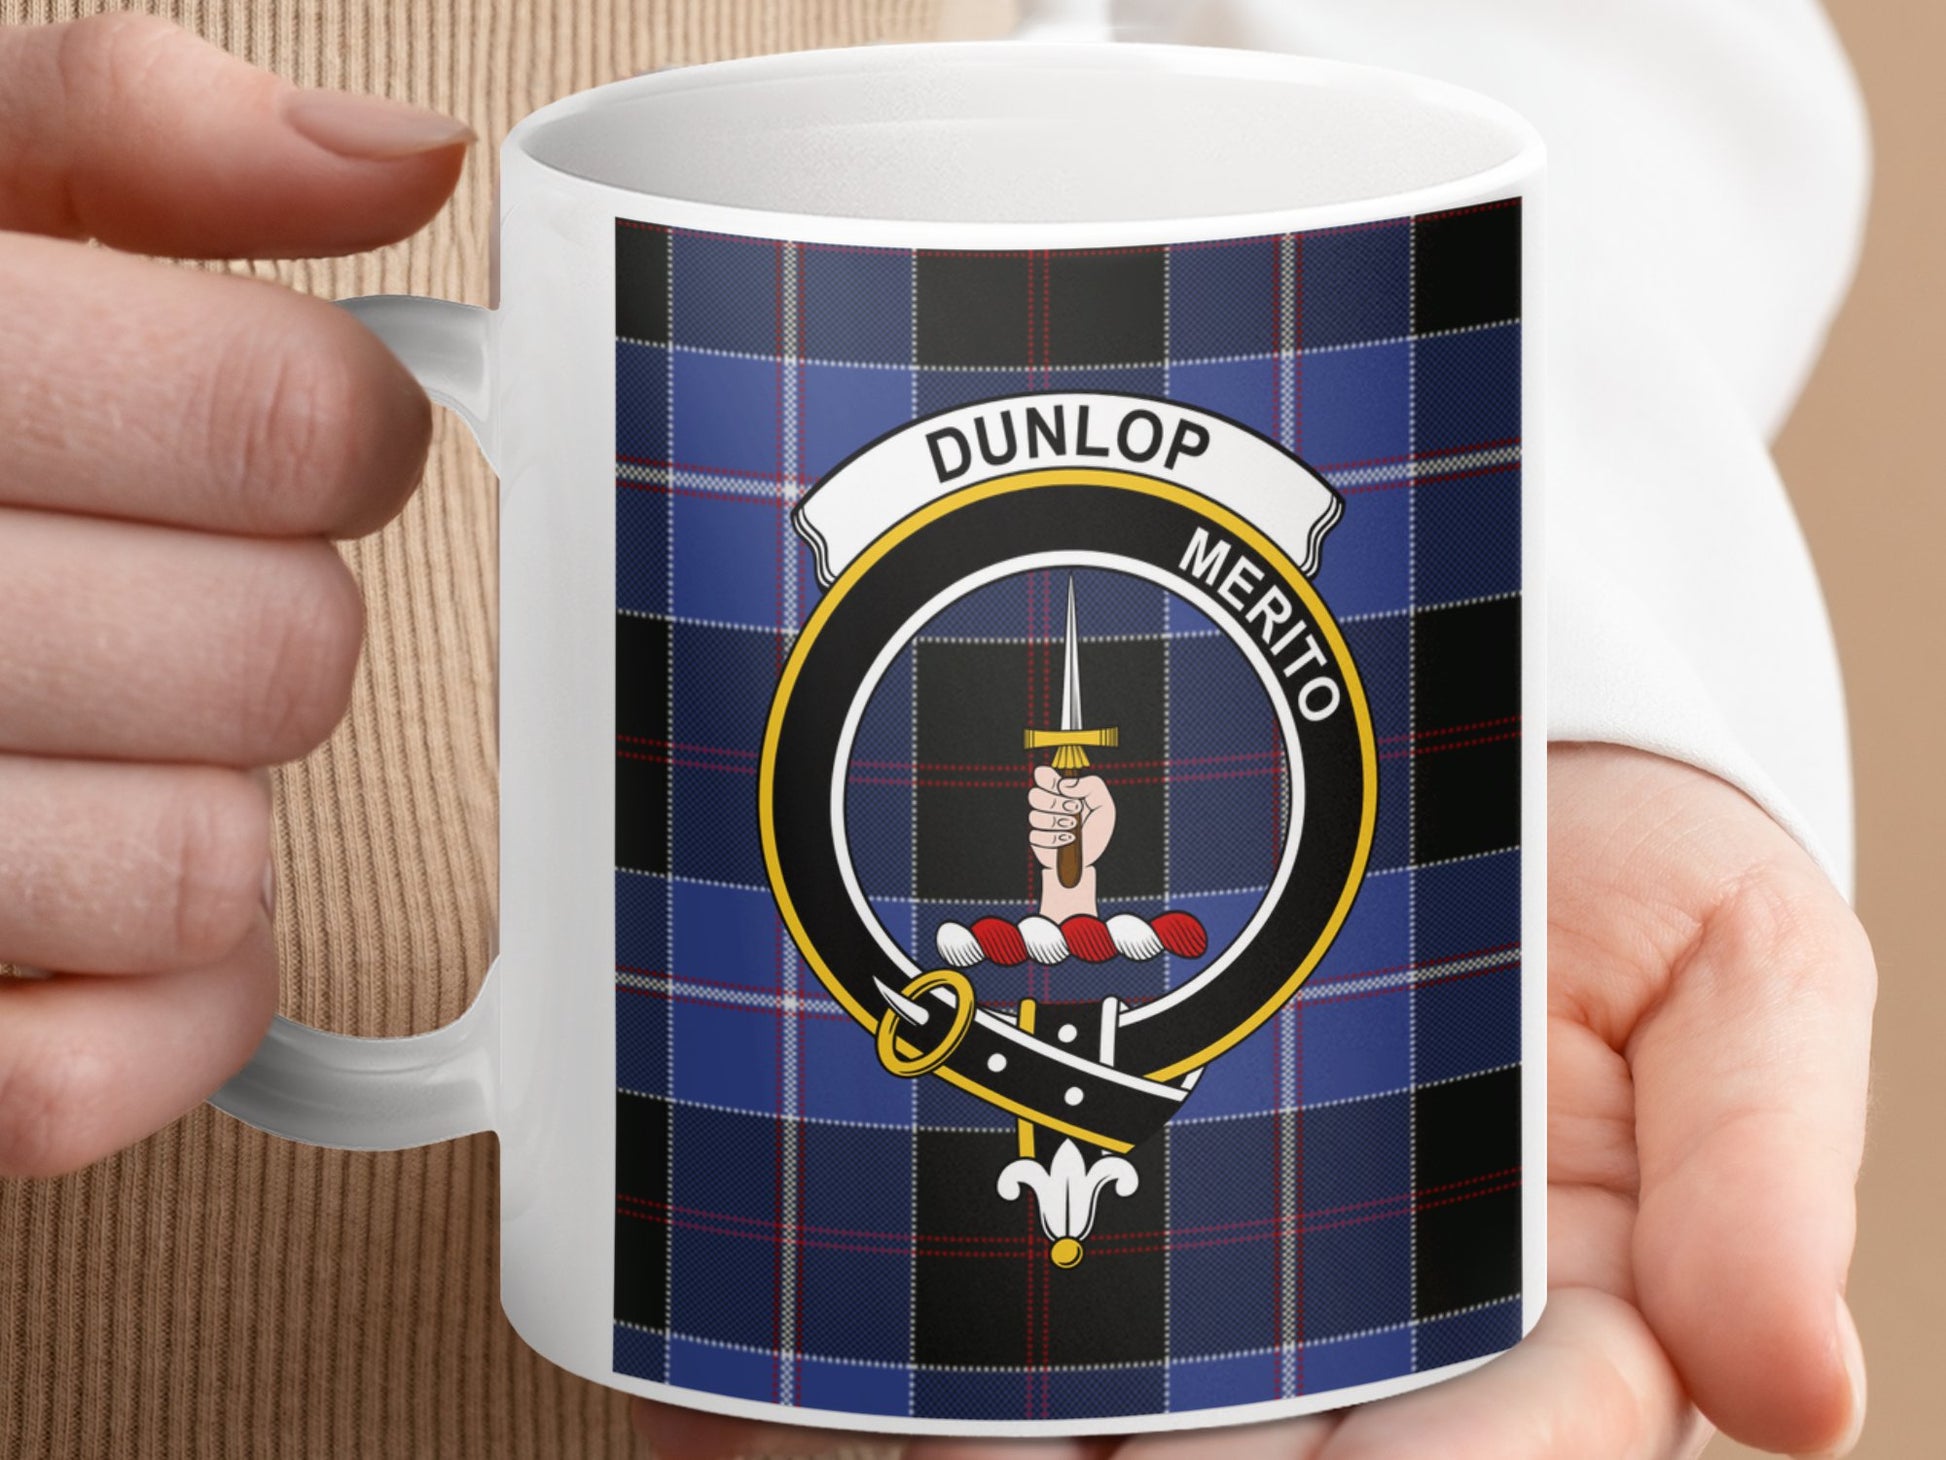 Dunlop Merito Scottish Tartan Crest Mug - Living Stone Gifts